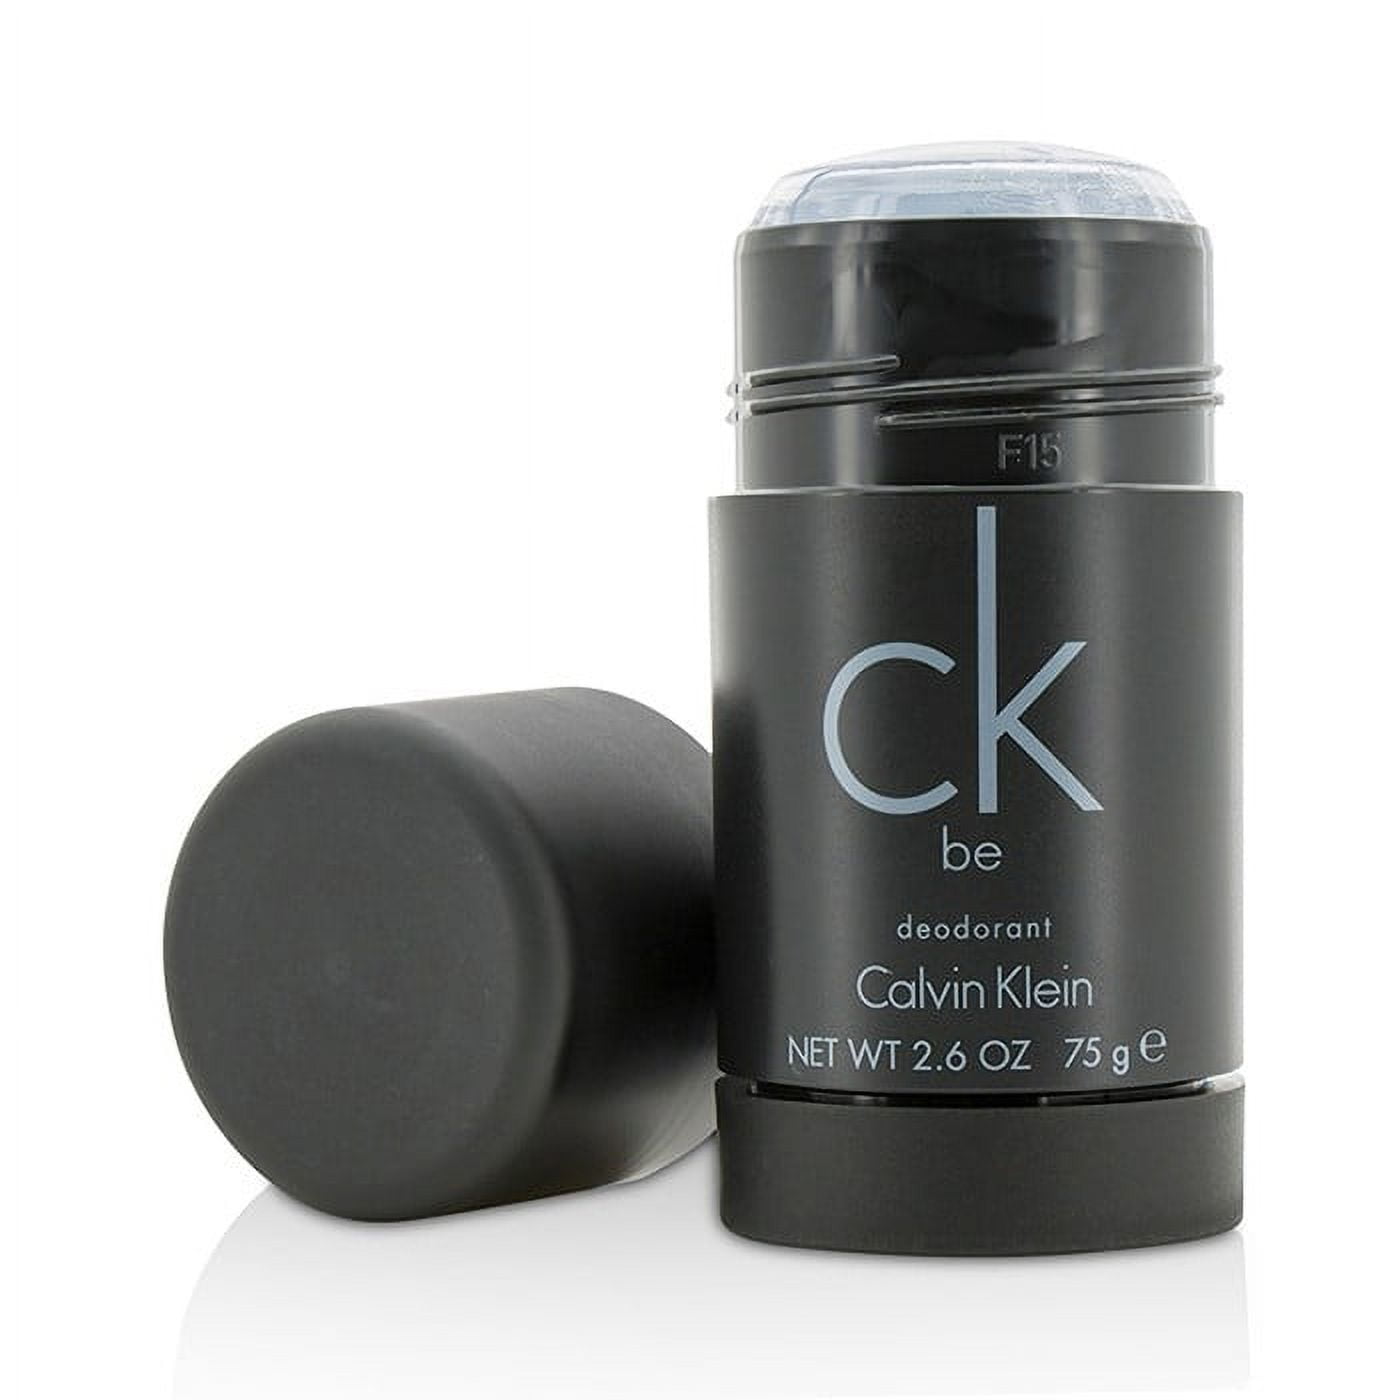 Deodorant Stick(75ml/2.6oz) Calvin Be Klein CK -